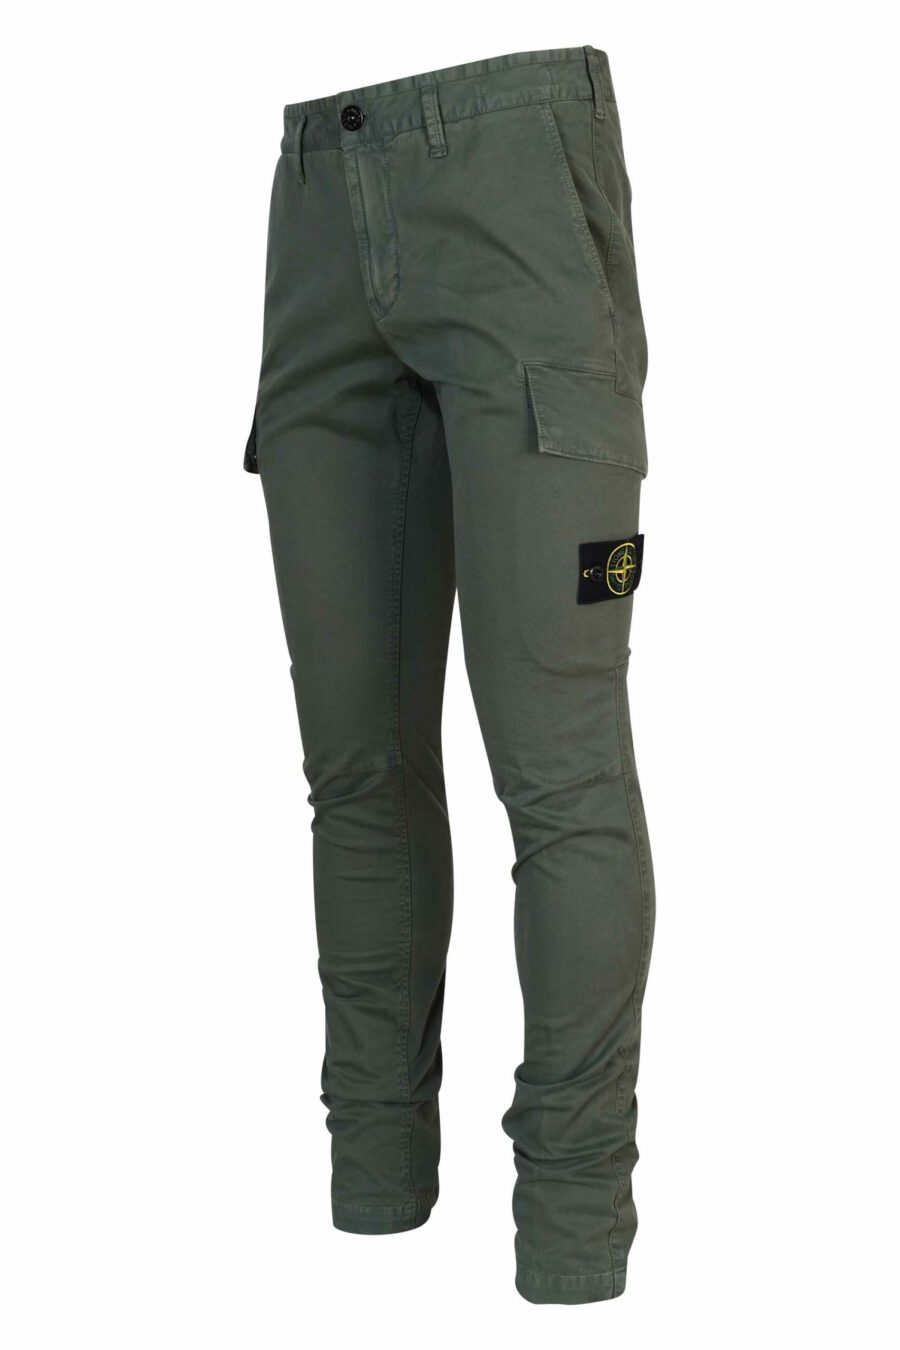 Pantalon cargo skinny vert militaire avec logo boussole - 8052572930263 1 scaled